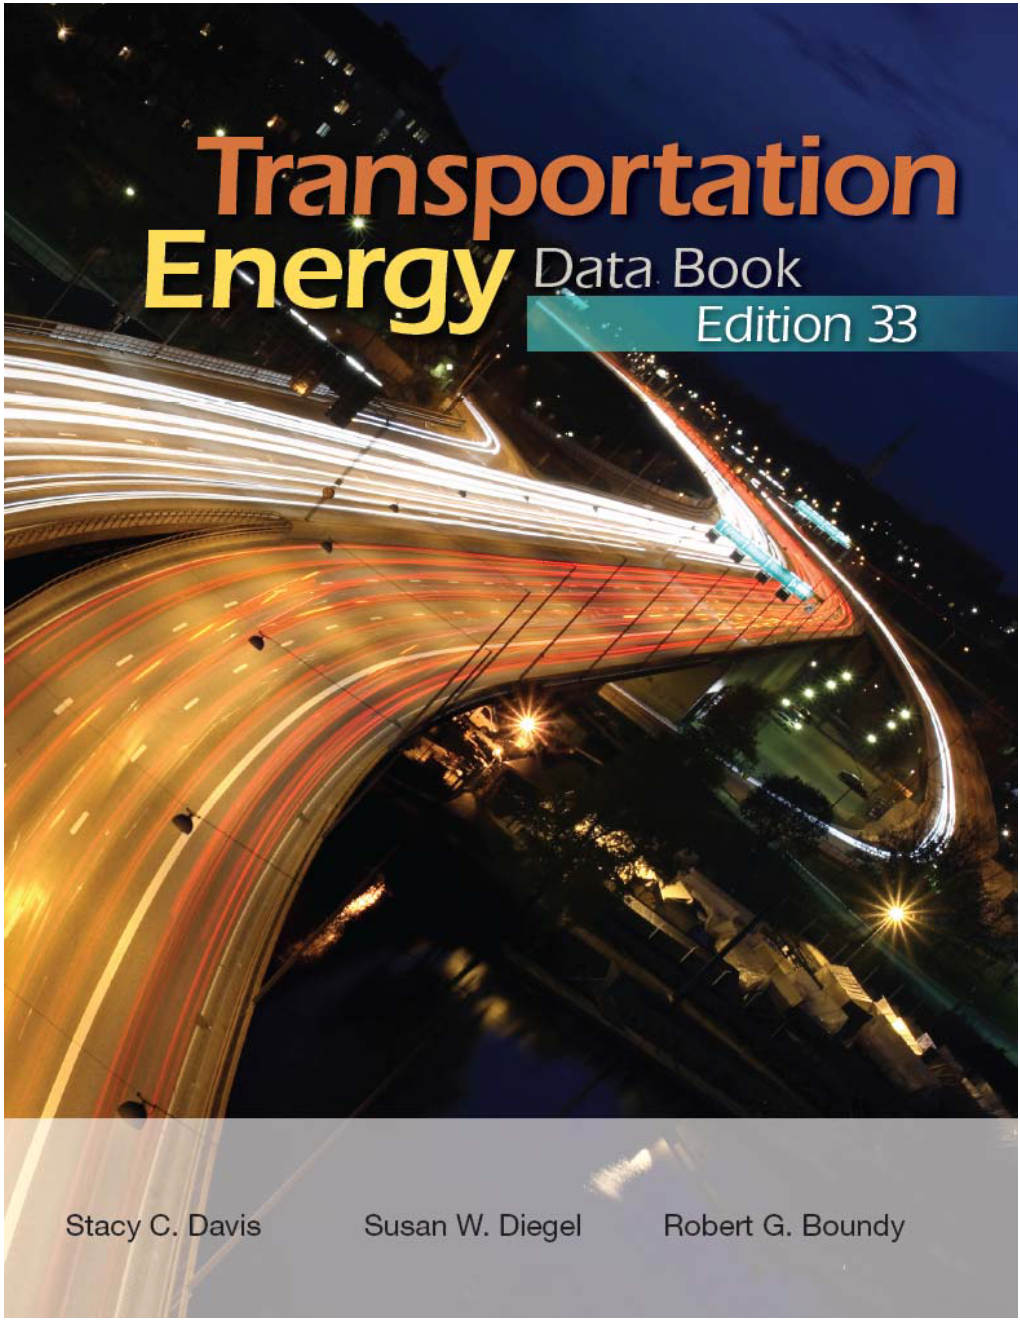 Transportation Energy Data Book: Edition 33